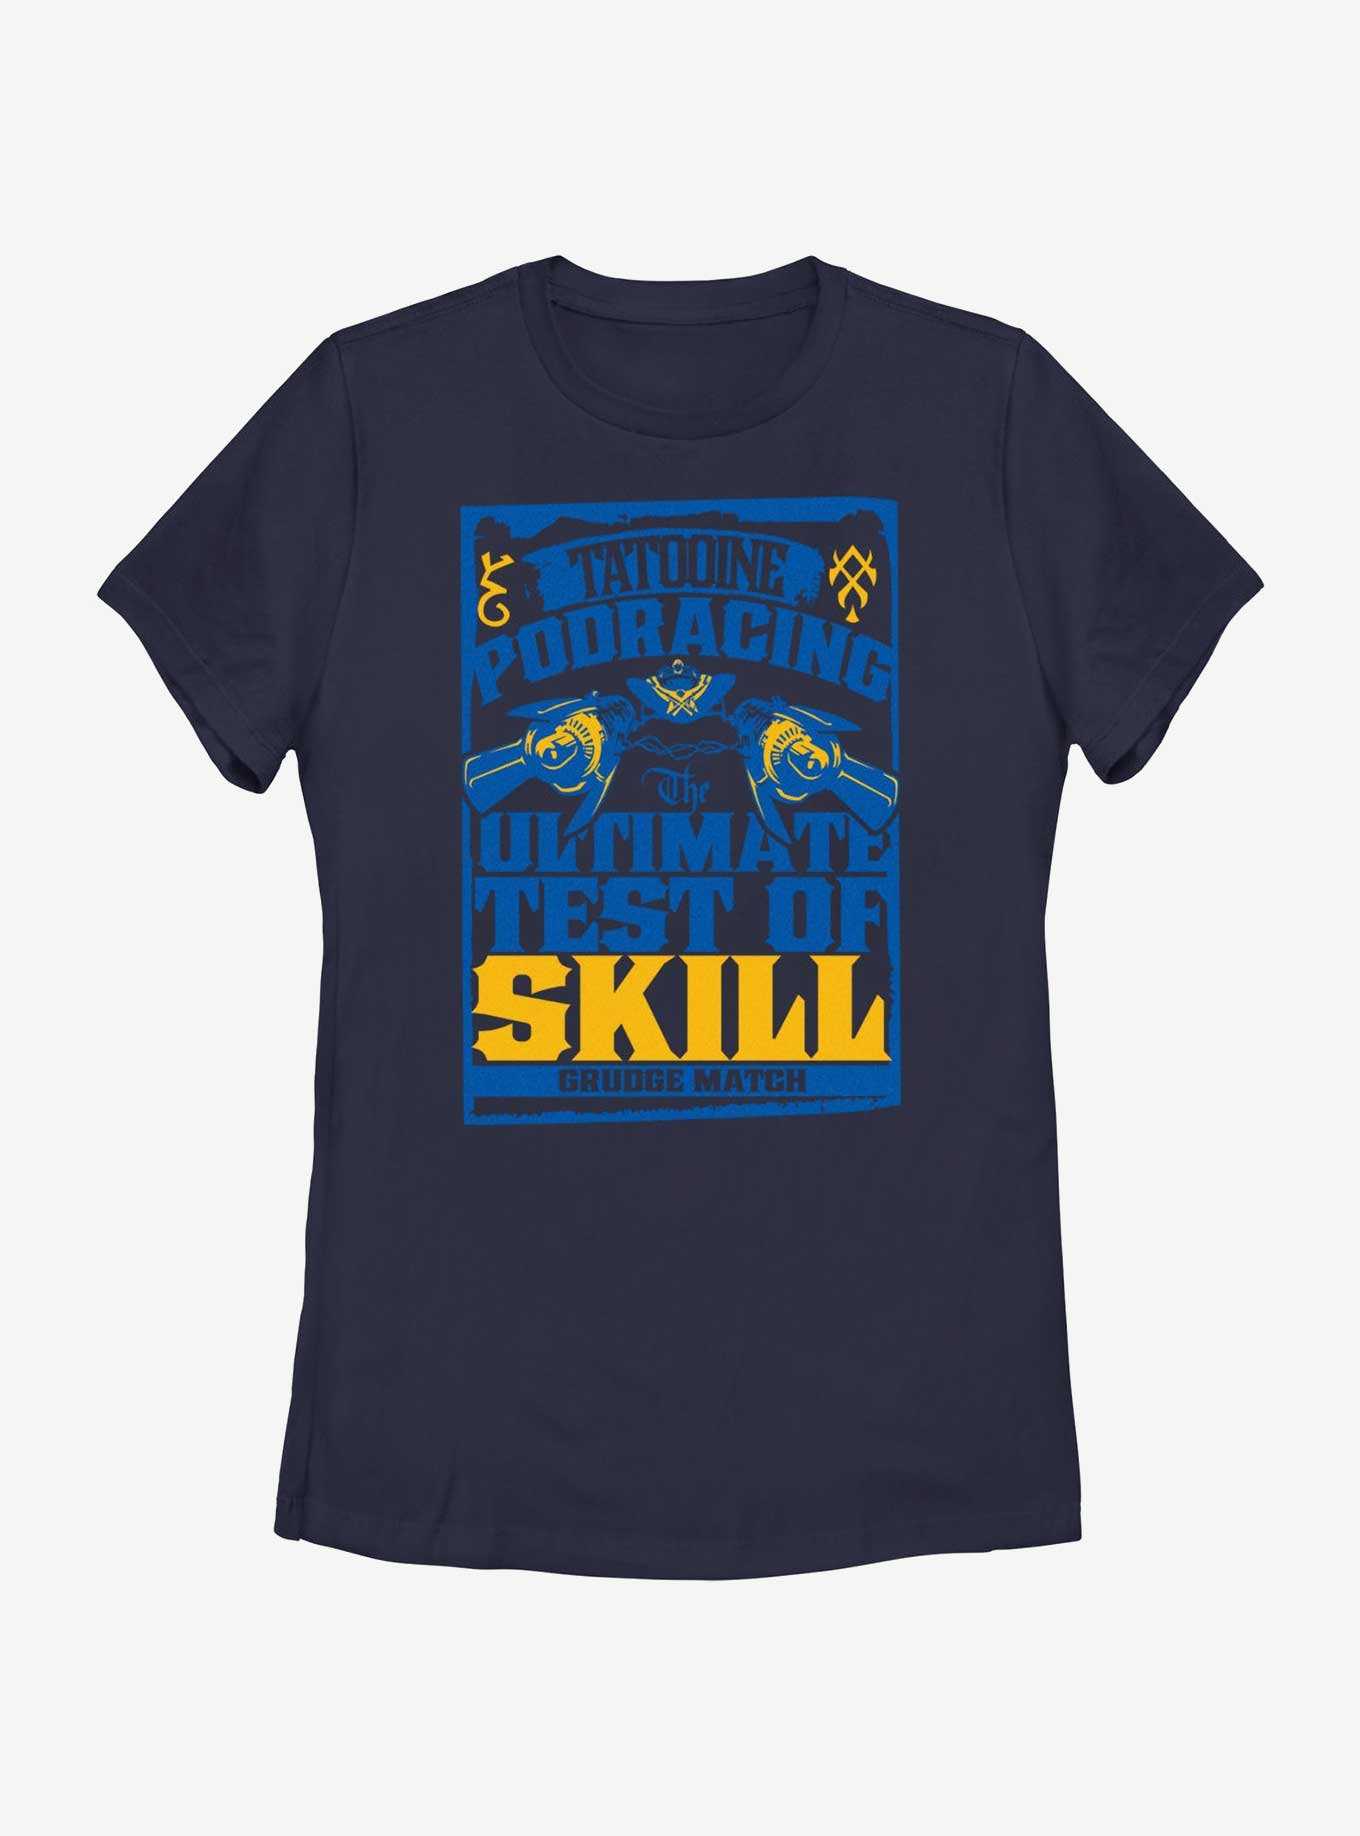 Star Wars Pod Racing Ultimate Test Of Skill Womens T-Shirt, , hi-res